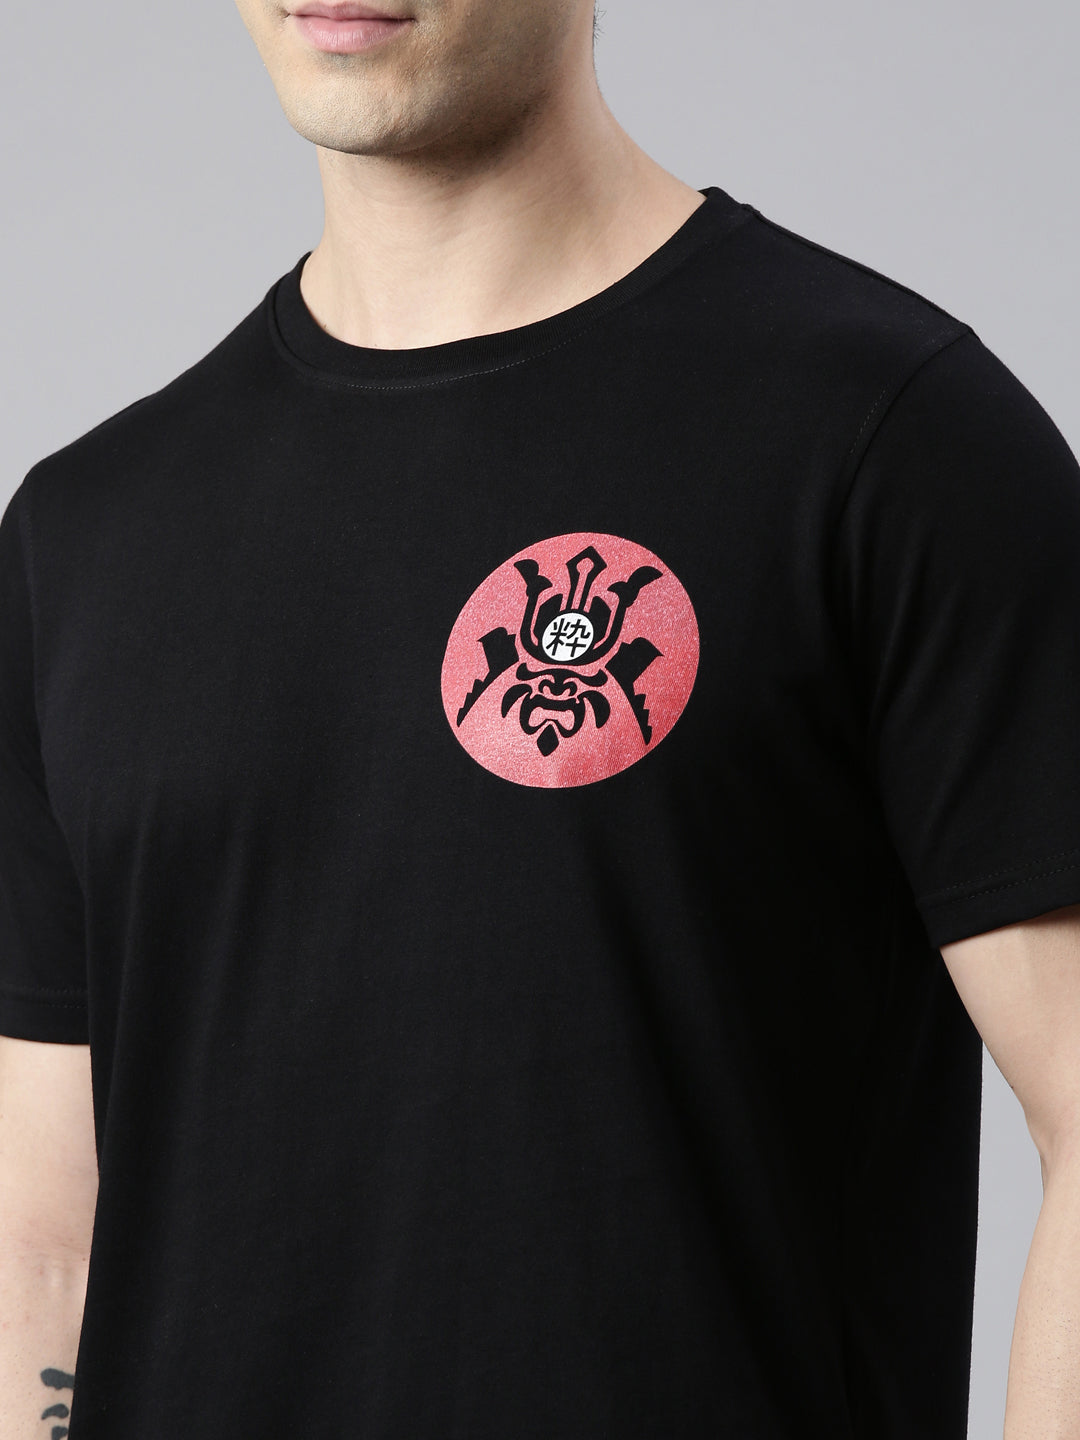 Know Bad Daze Shirt Size Large Anime Skateboard | eBay